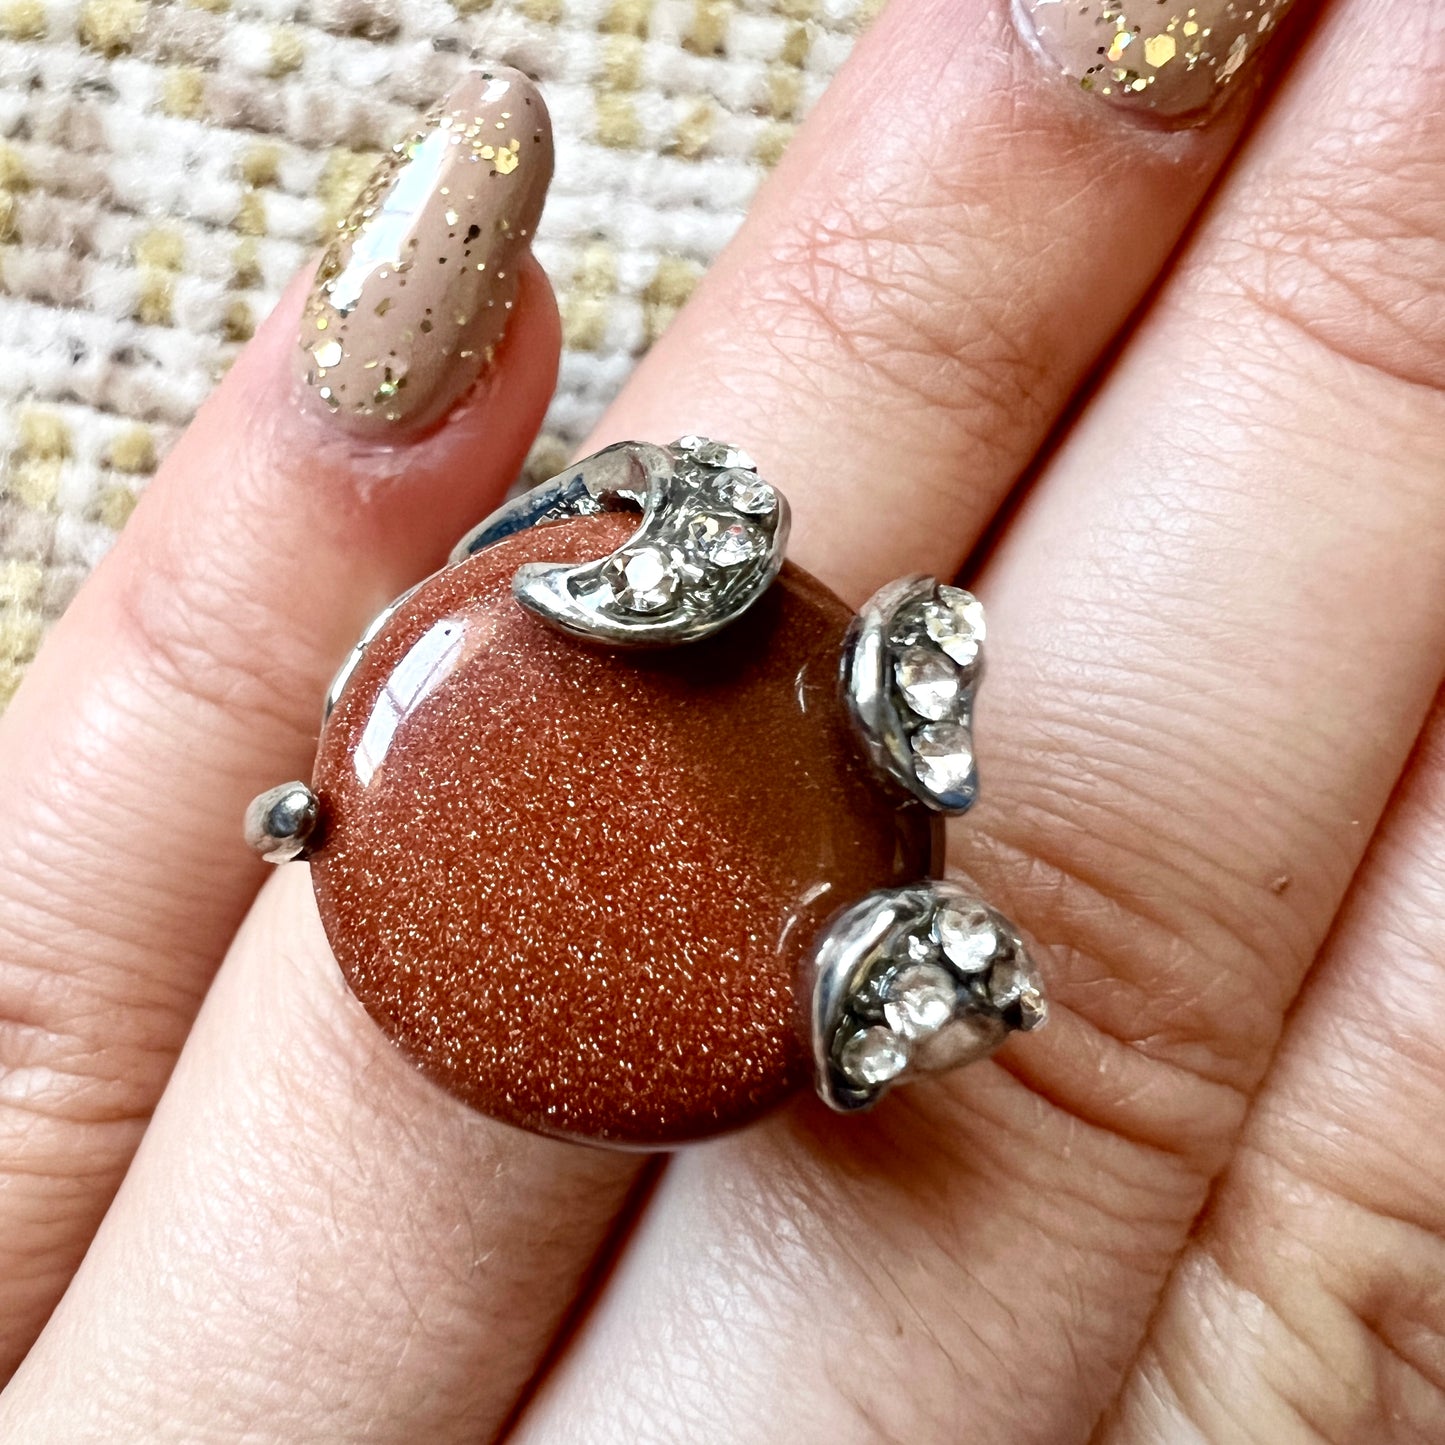 [AS-IS] Vintage Style Sandstone & Rhinestone Ring | size 5.75